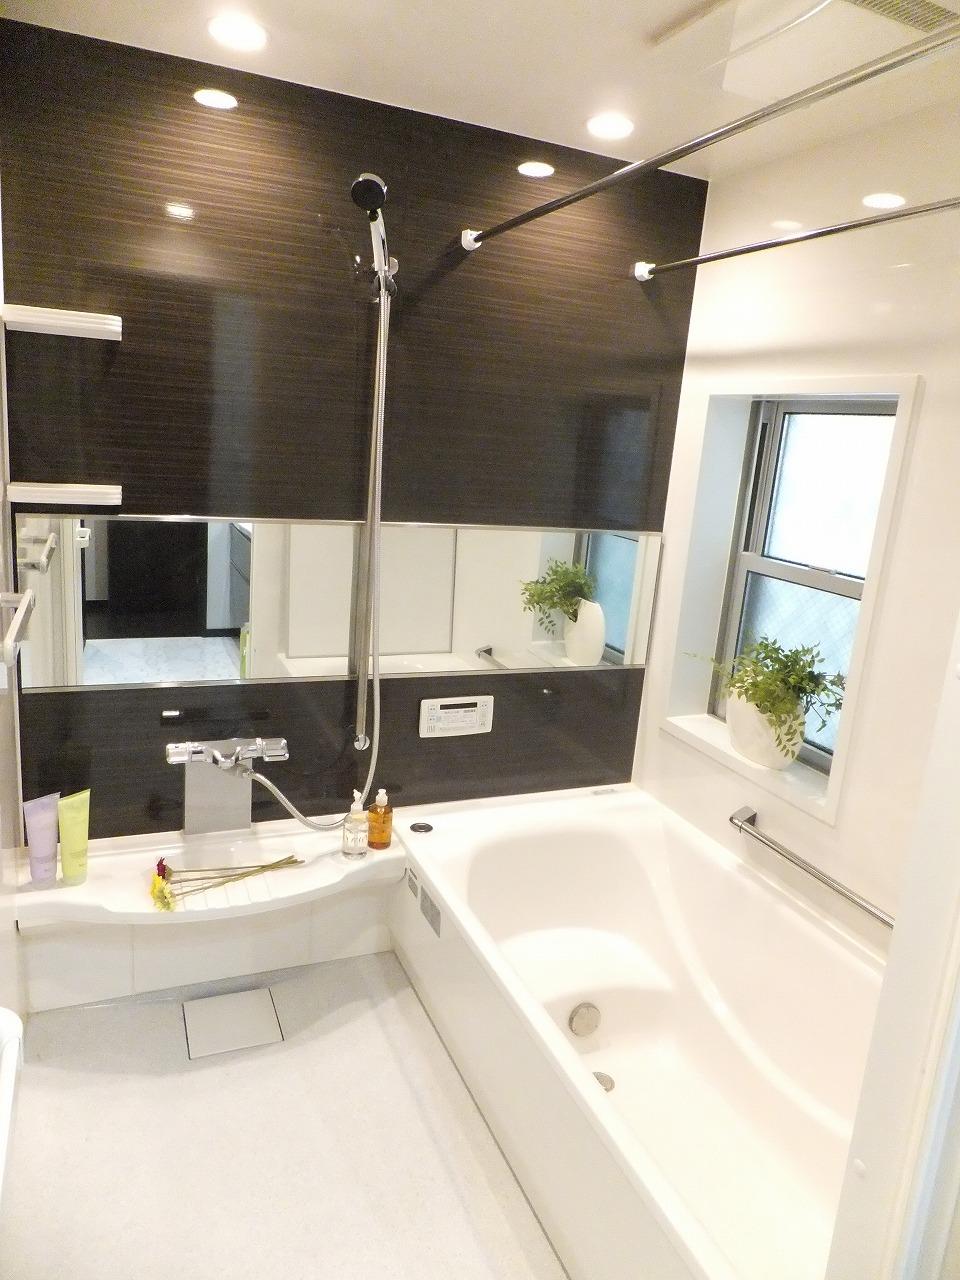 Bathroom. Indoor (10 May 2013) Shooting Bright and highly functional bathroom.